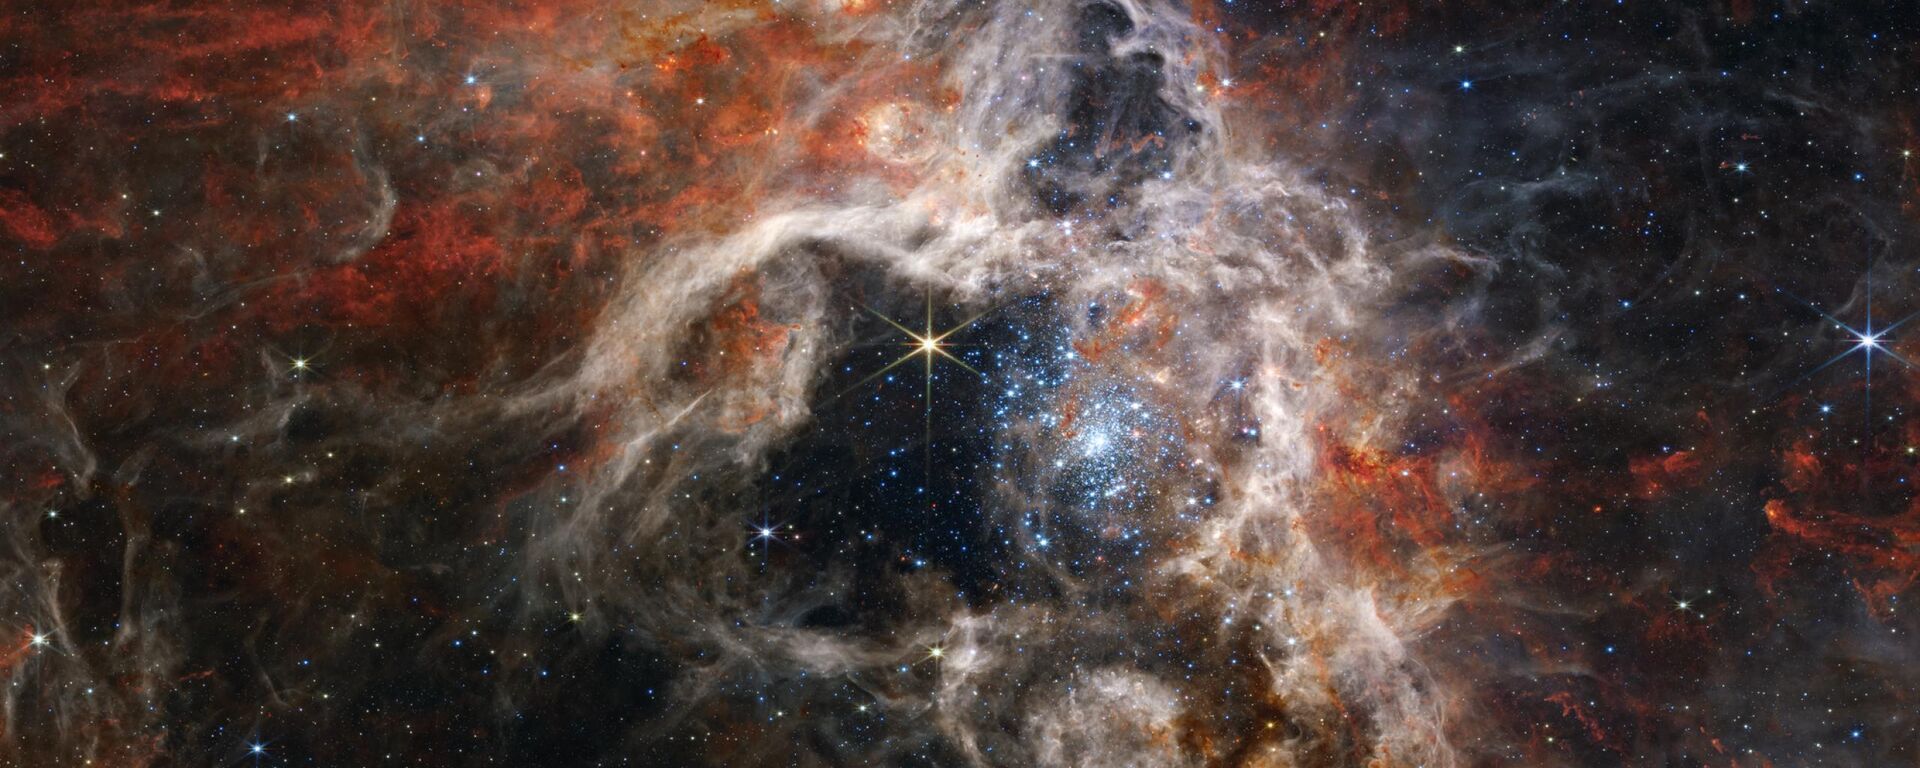 Tarántula cósmica captada por el telescopio James Webb. - Sputnik Srbija, 1920, 08.09.2022